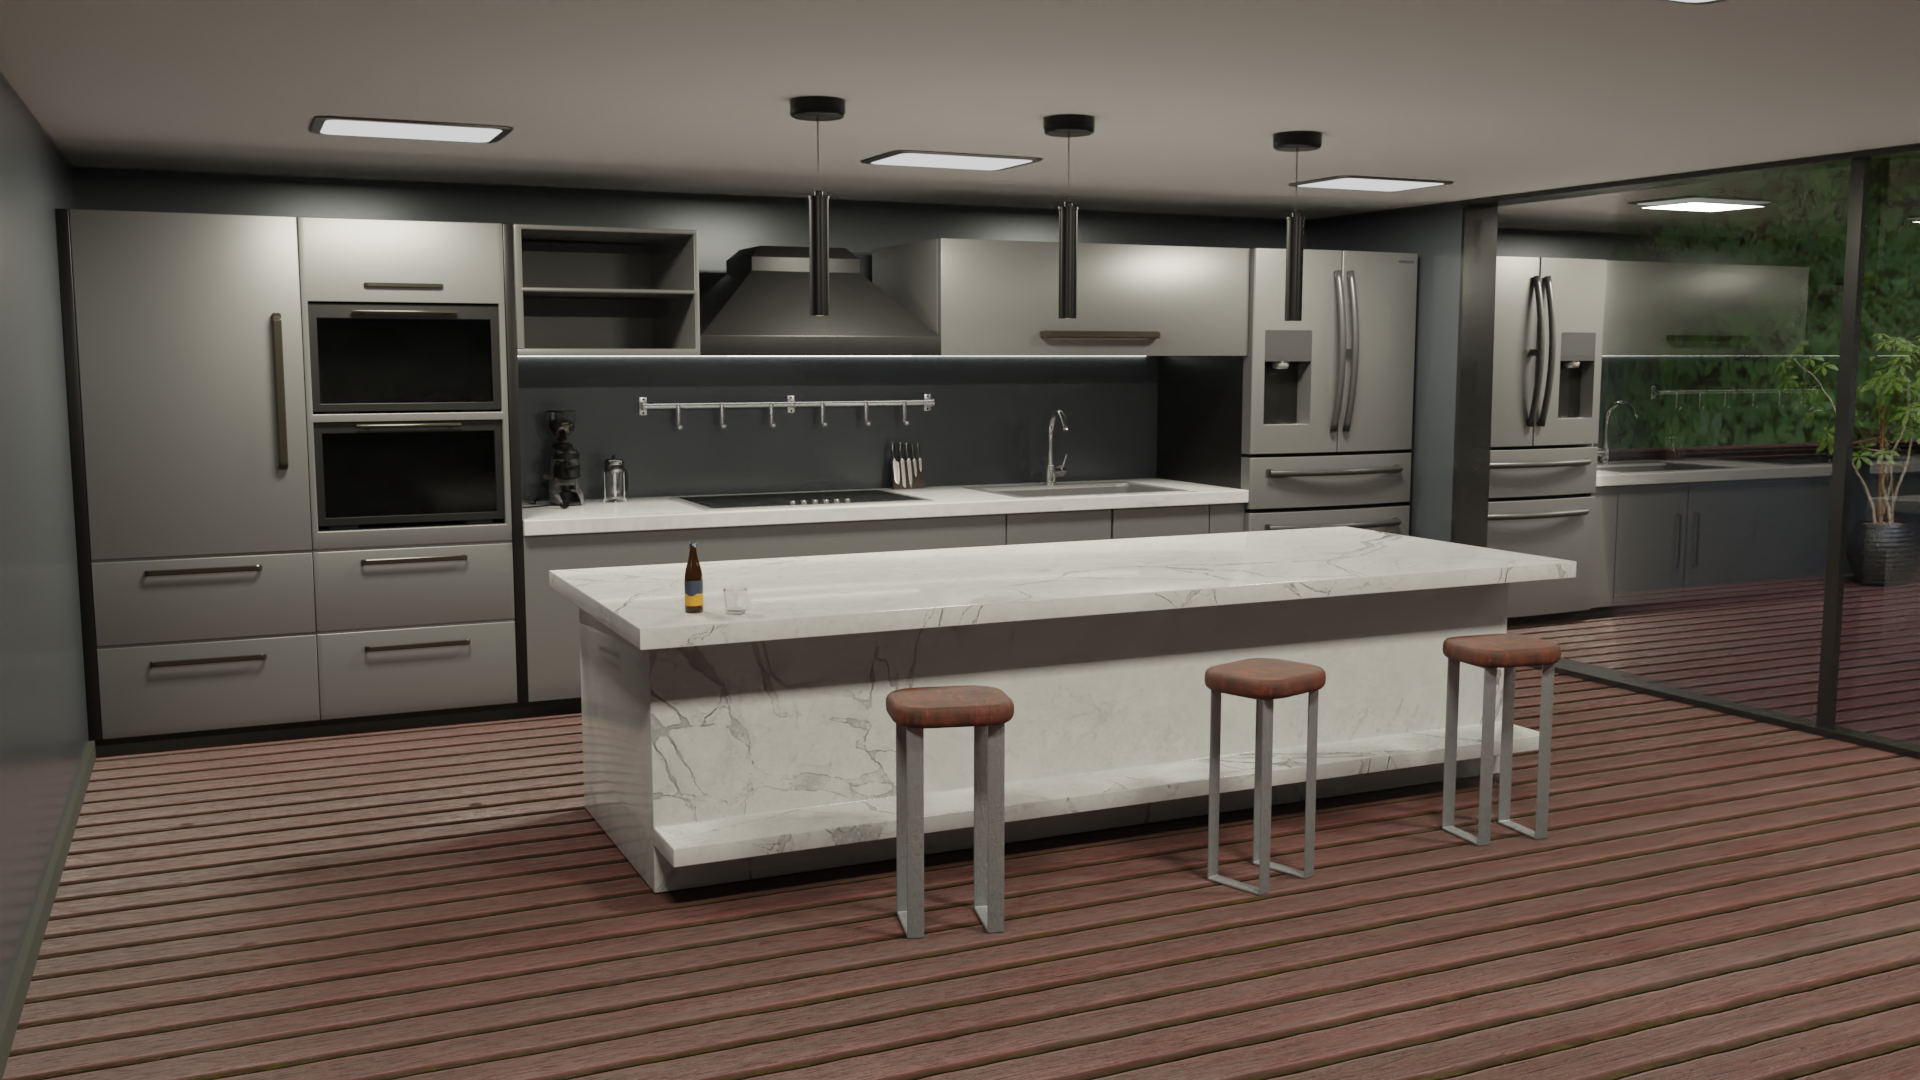 Kitchen interior design preview image 3